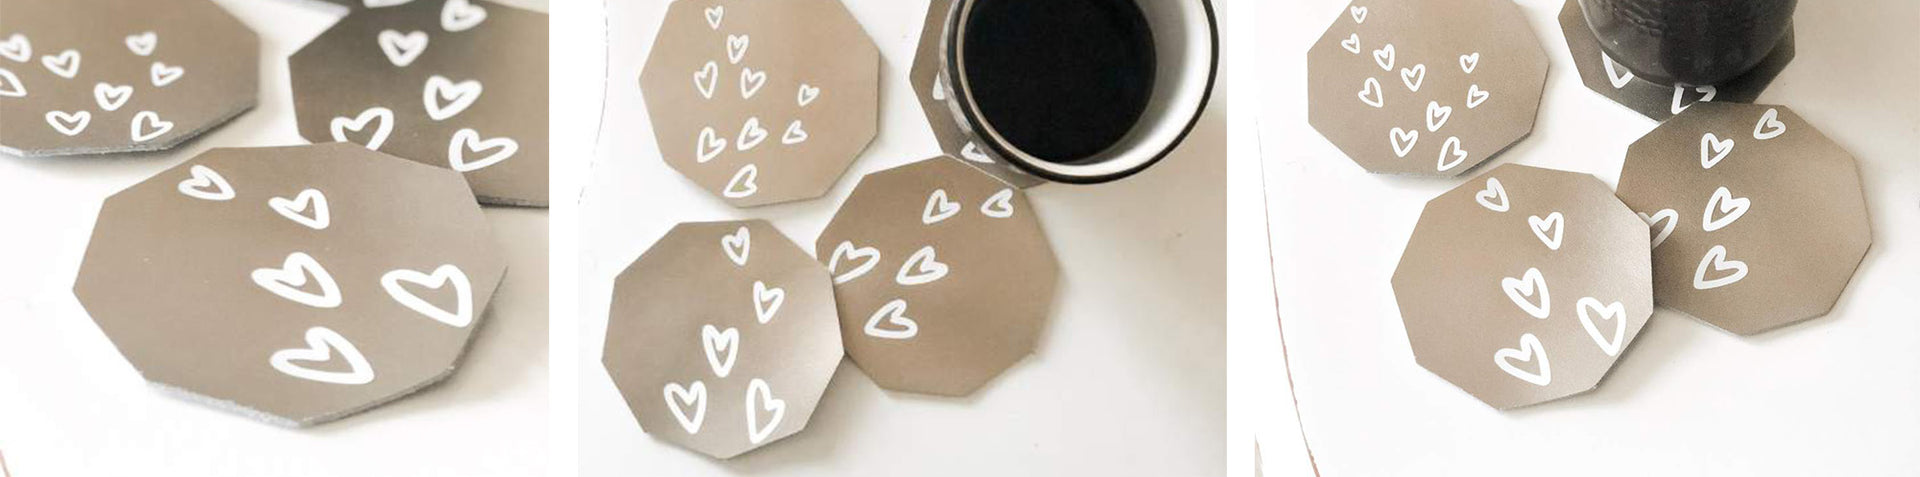 DIY Metallic Leather Heart Coasters Using Cricut